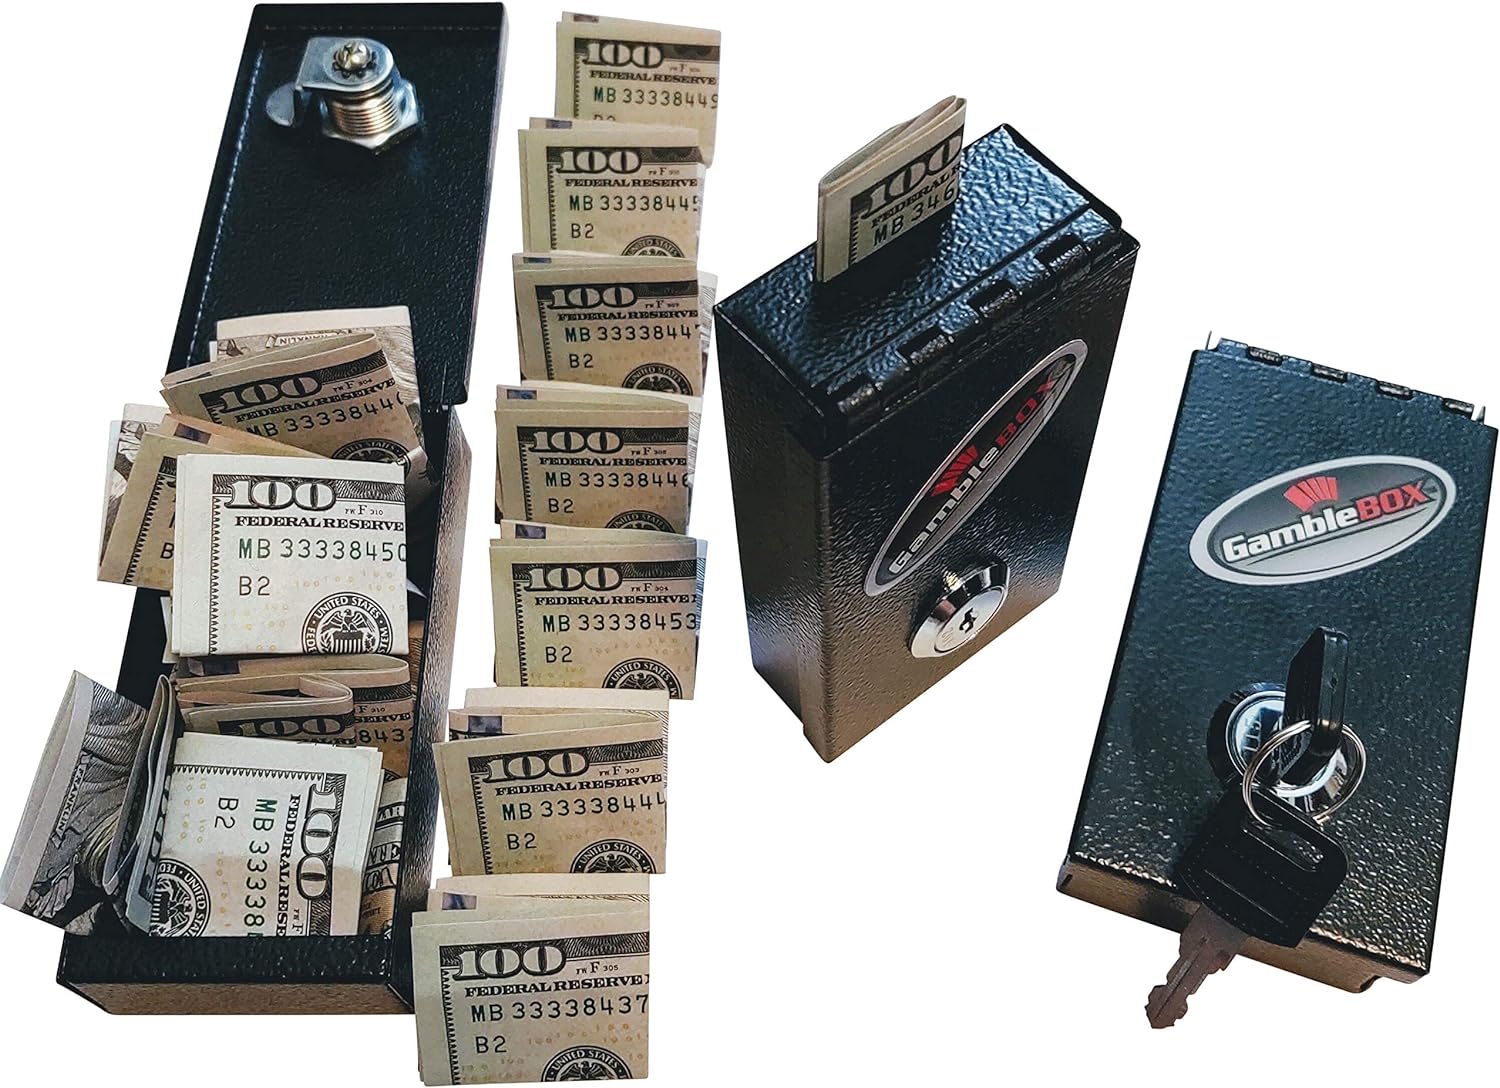 Gamblebox Gambling Personal Pocket Cash Drop Lock Box Safe Wallet With Red Velvet Carrying Bag